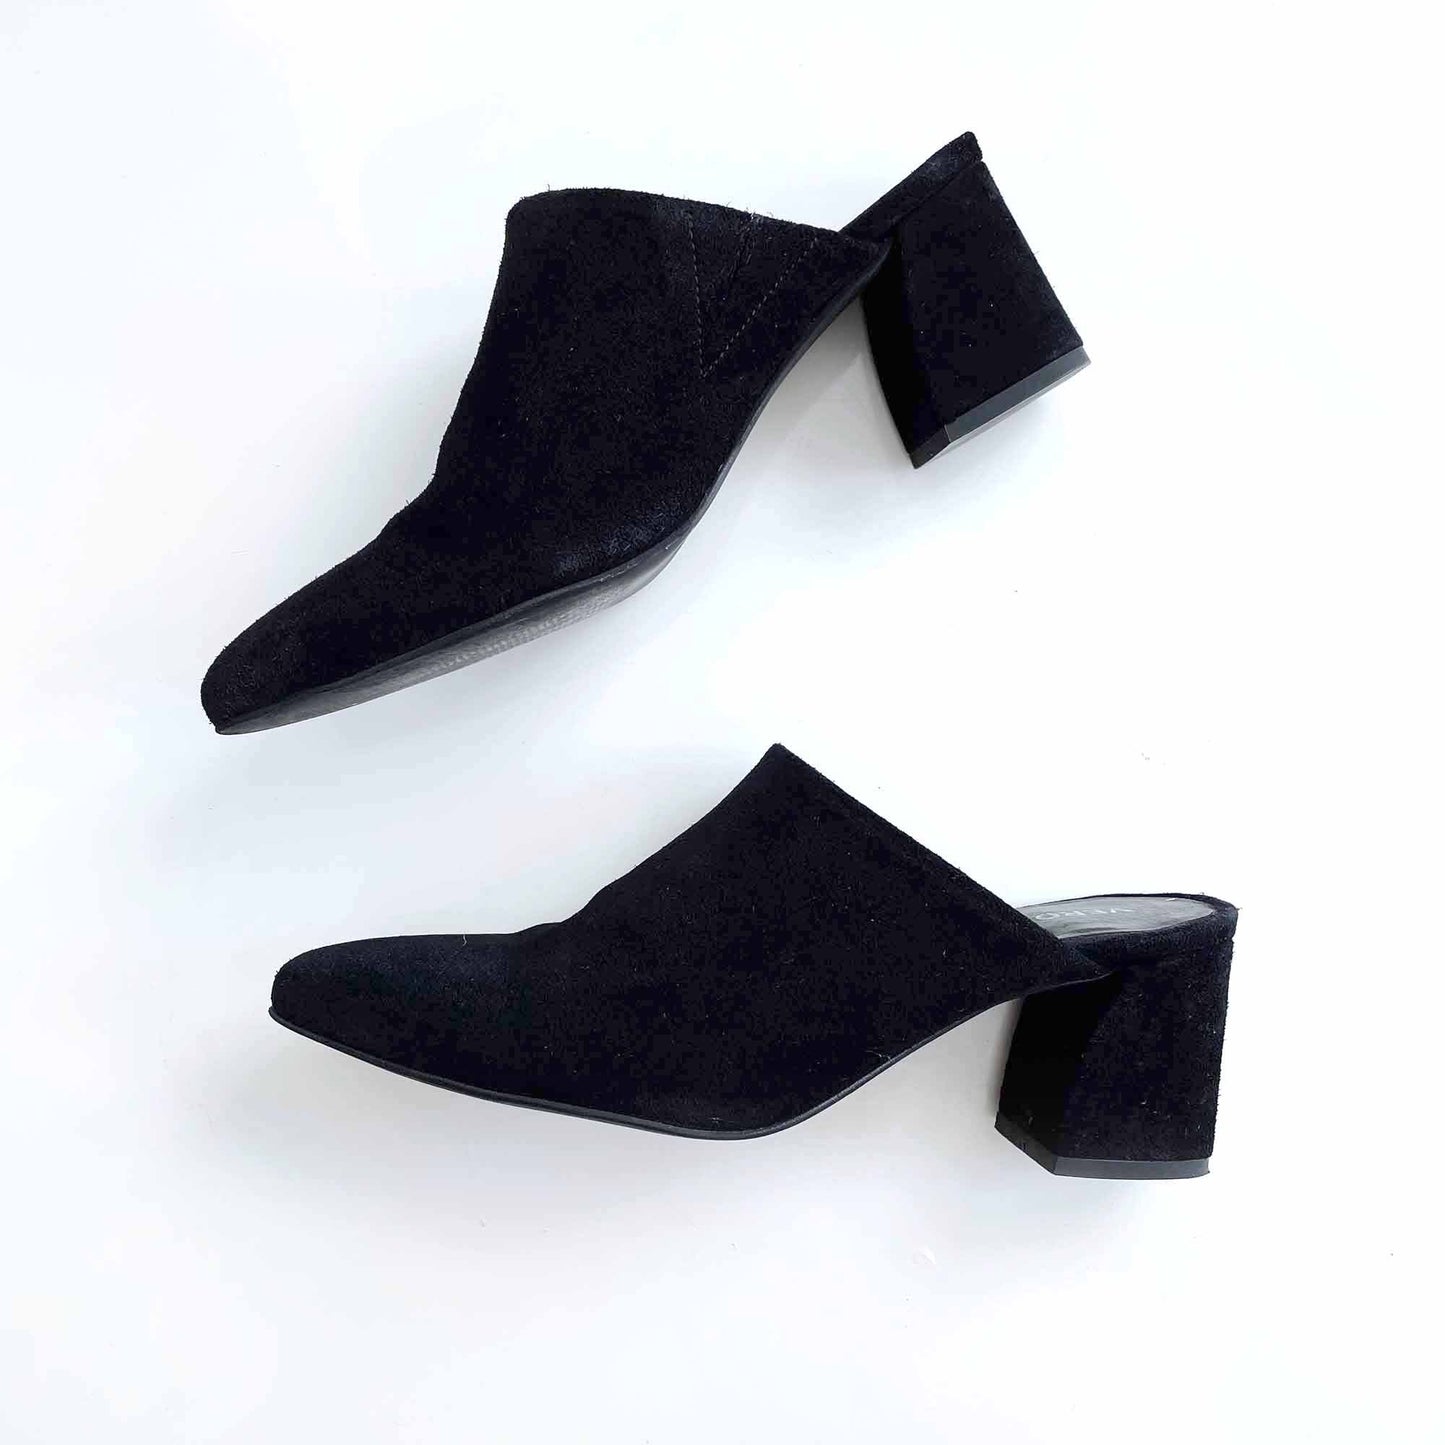 vero moda black suede leather mules - size 6